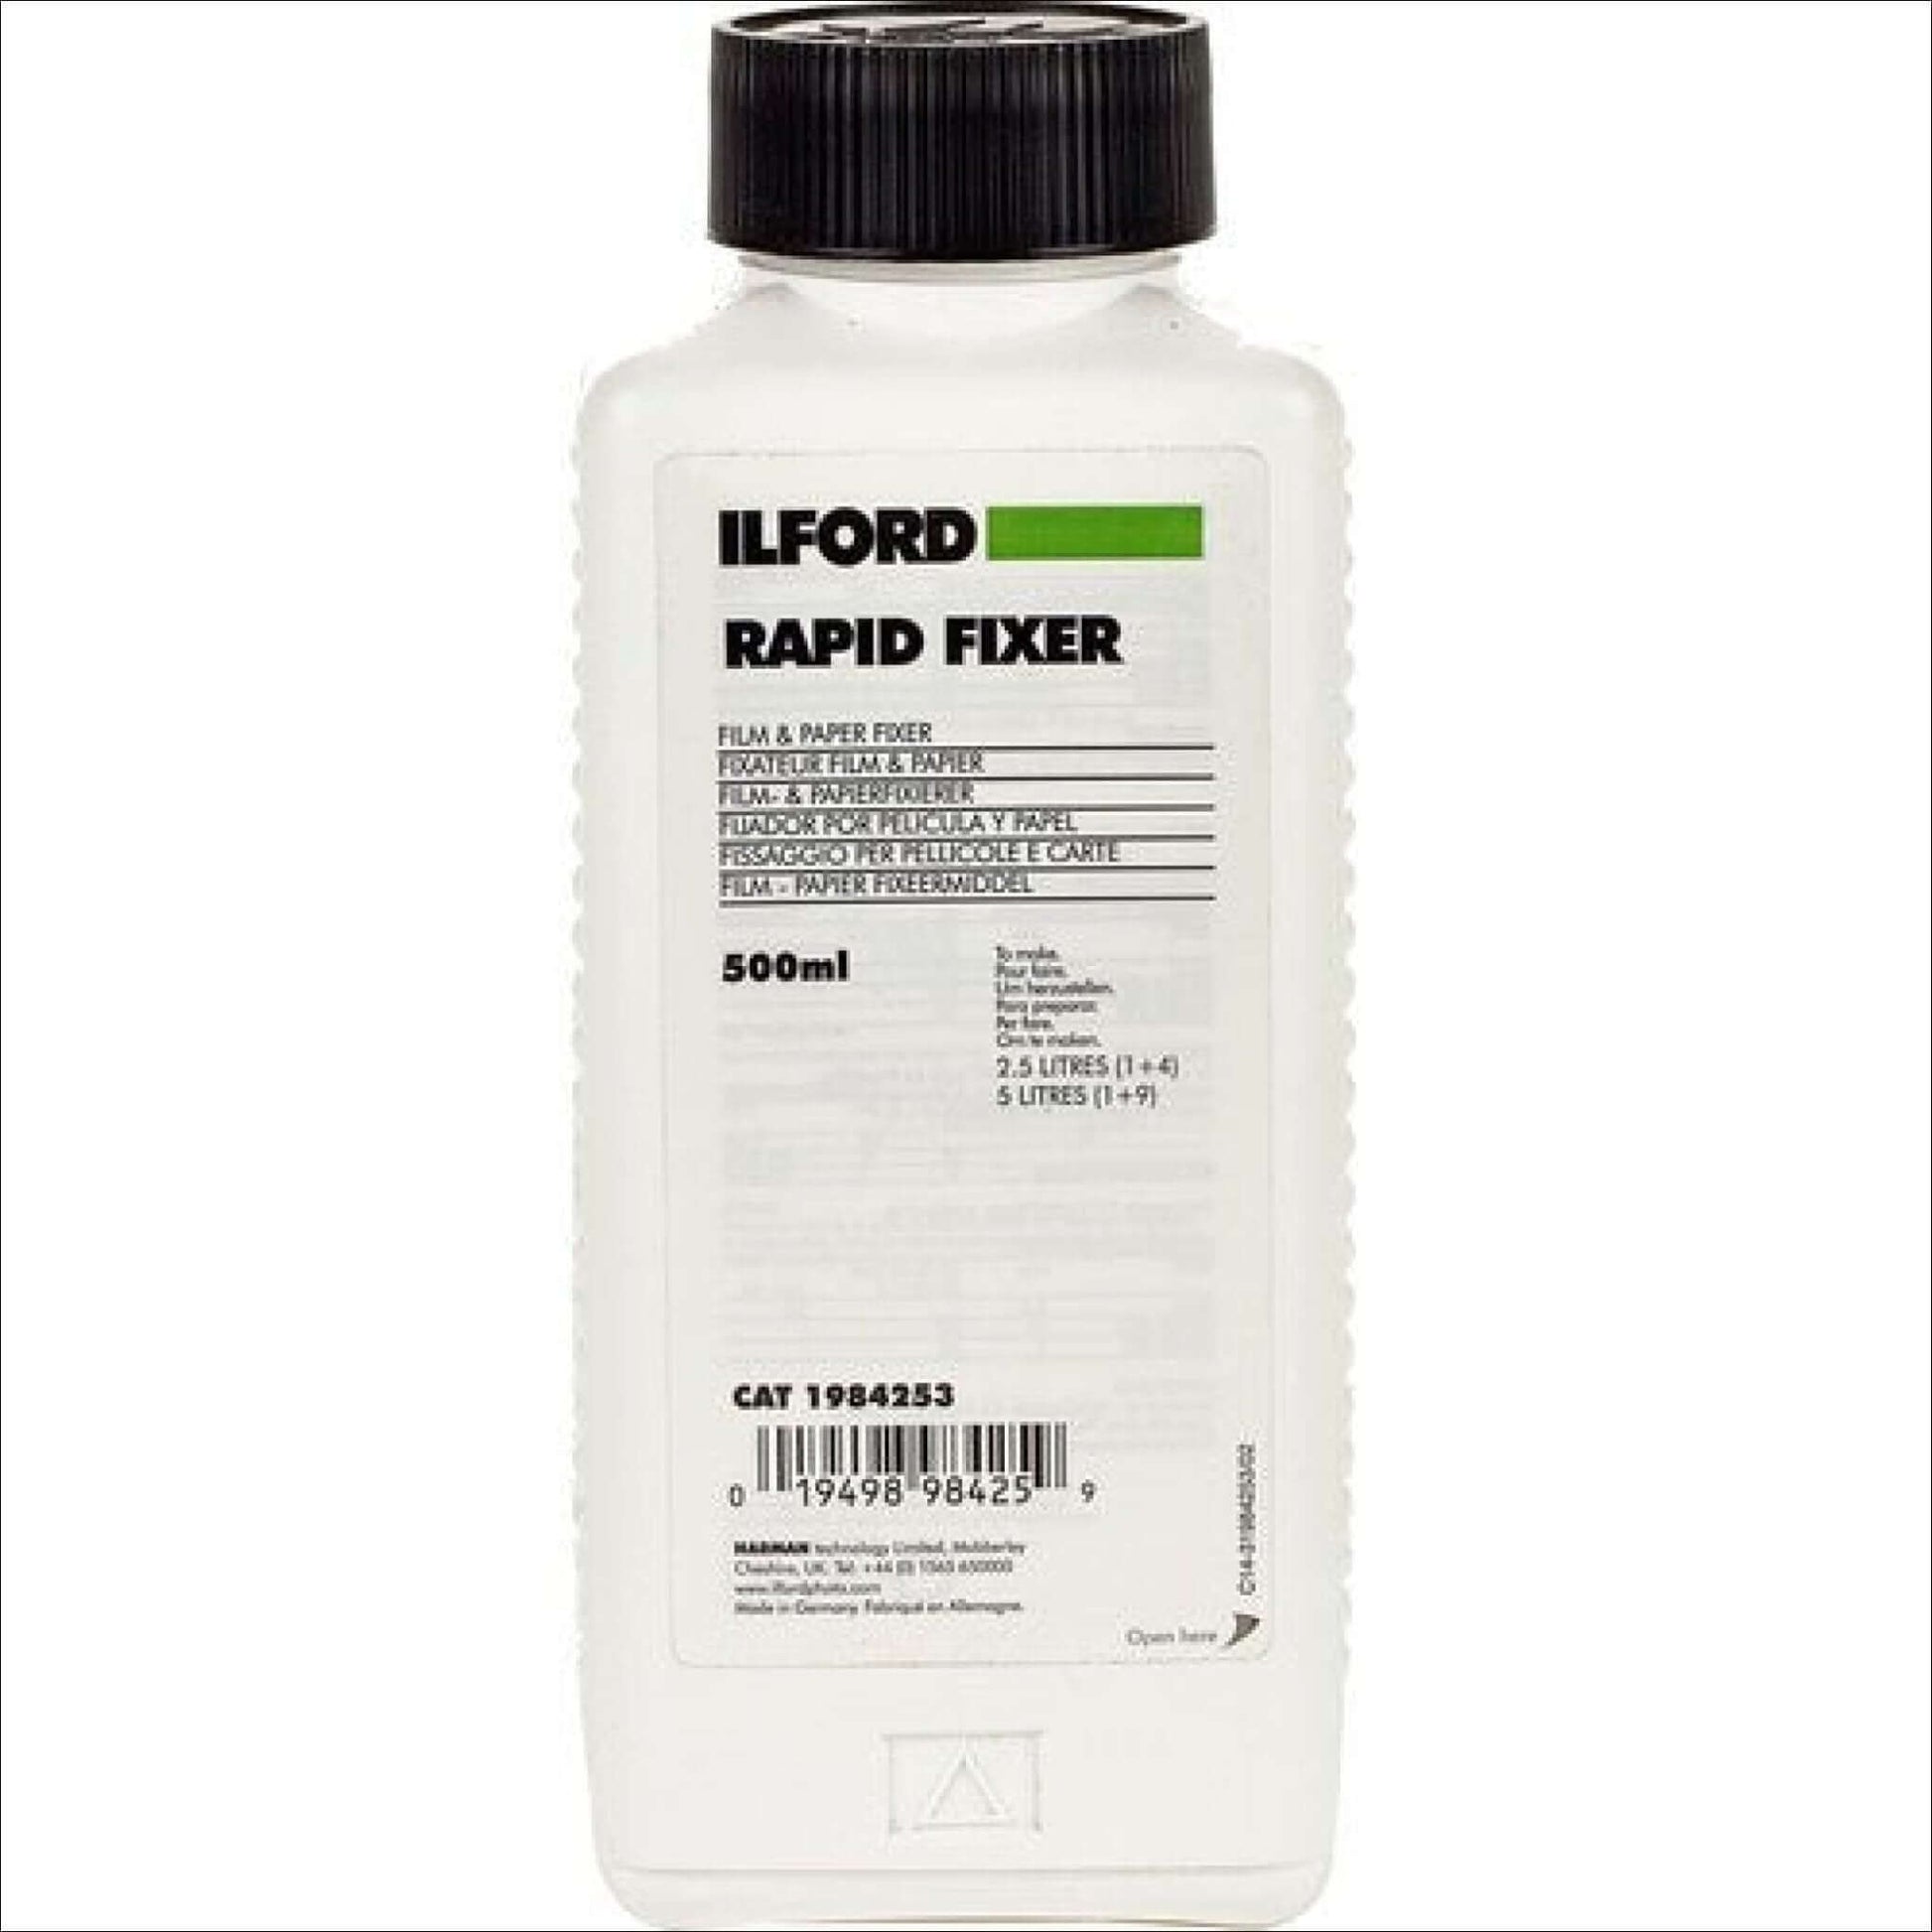 Ilford Rapid Fixer 500 Ml Liquid For Film And Paper